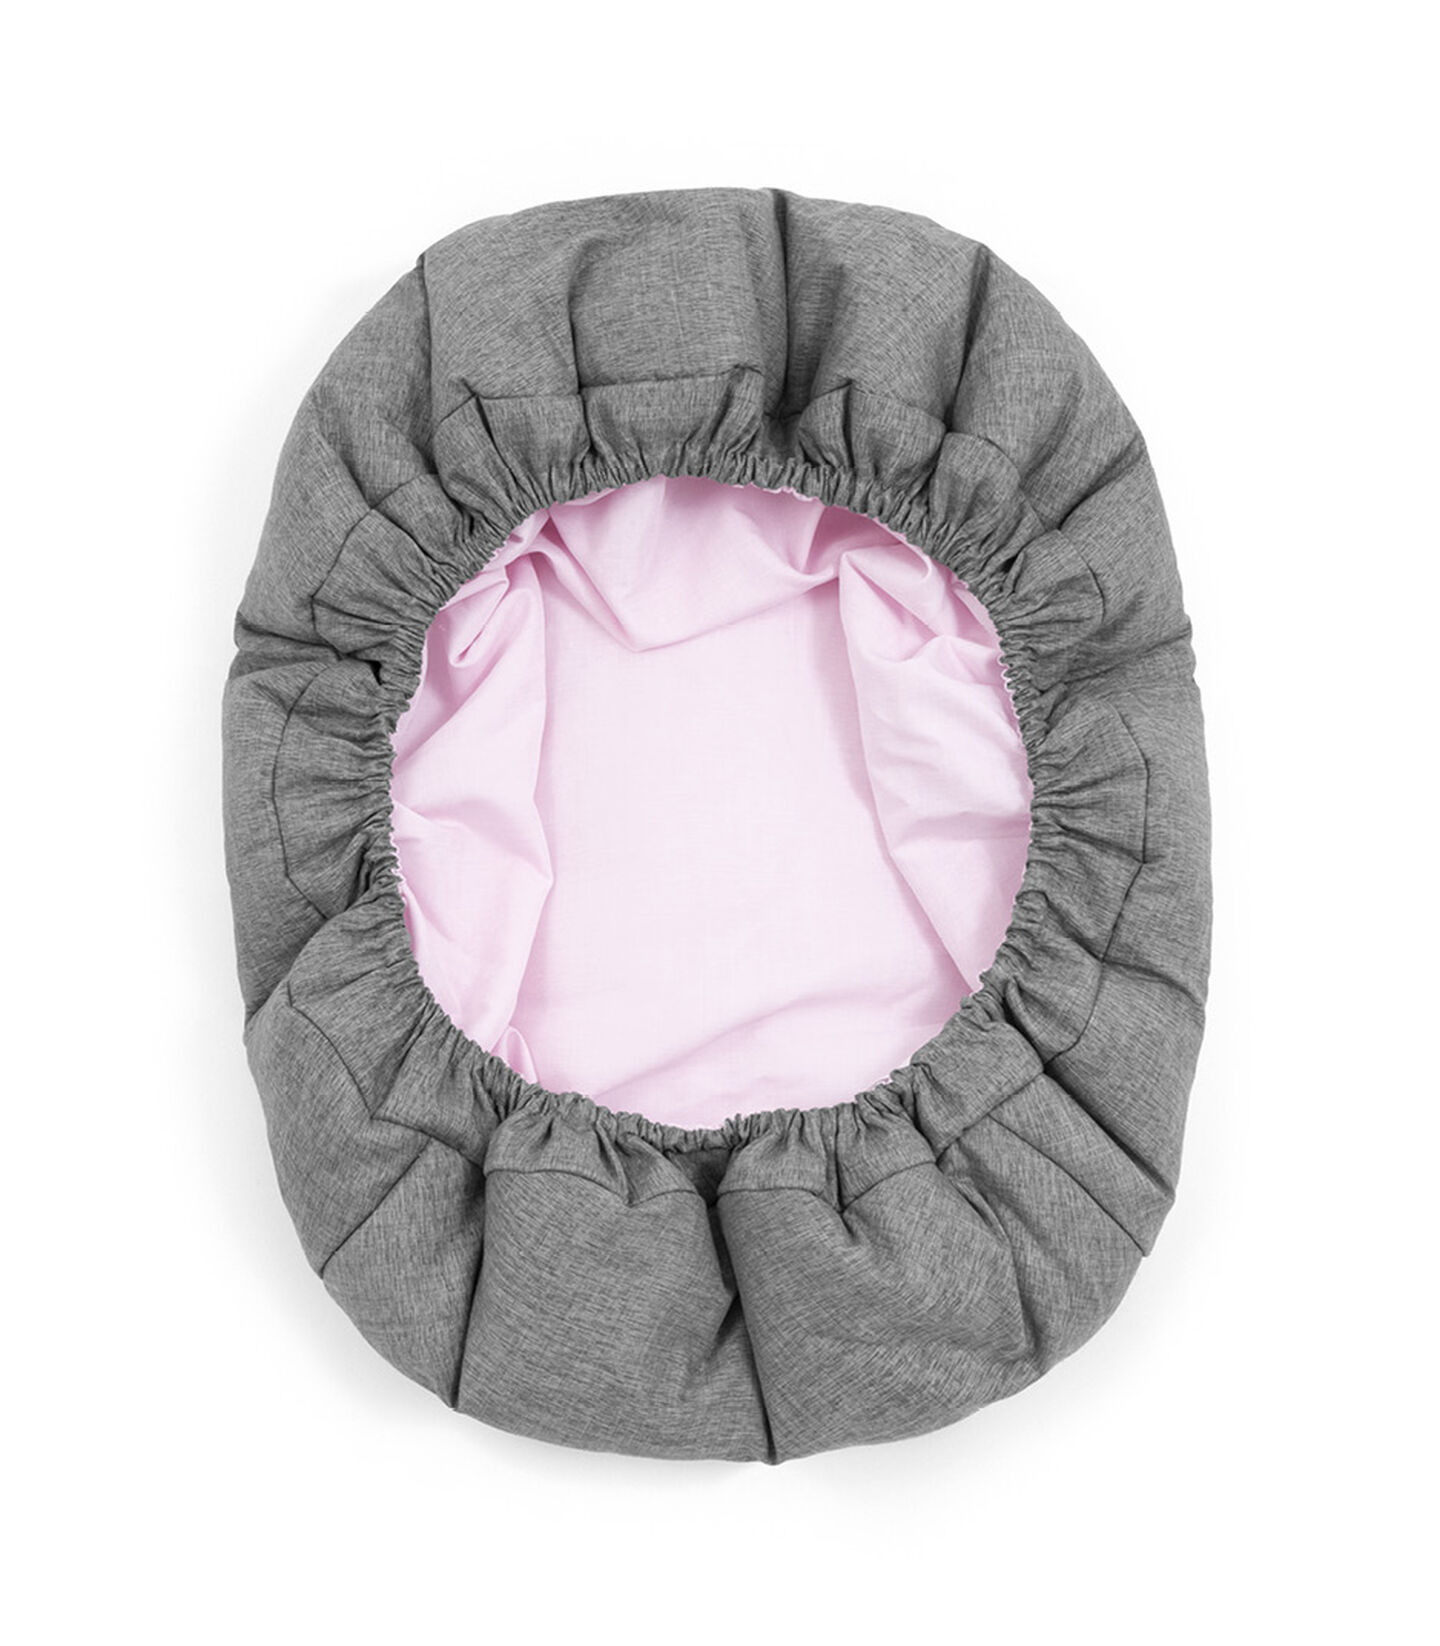 Stokke® Nomi® Newborn Set Gris/Gris Rose, Grey Grey Pink, mainview view 8